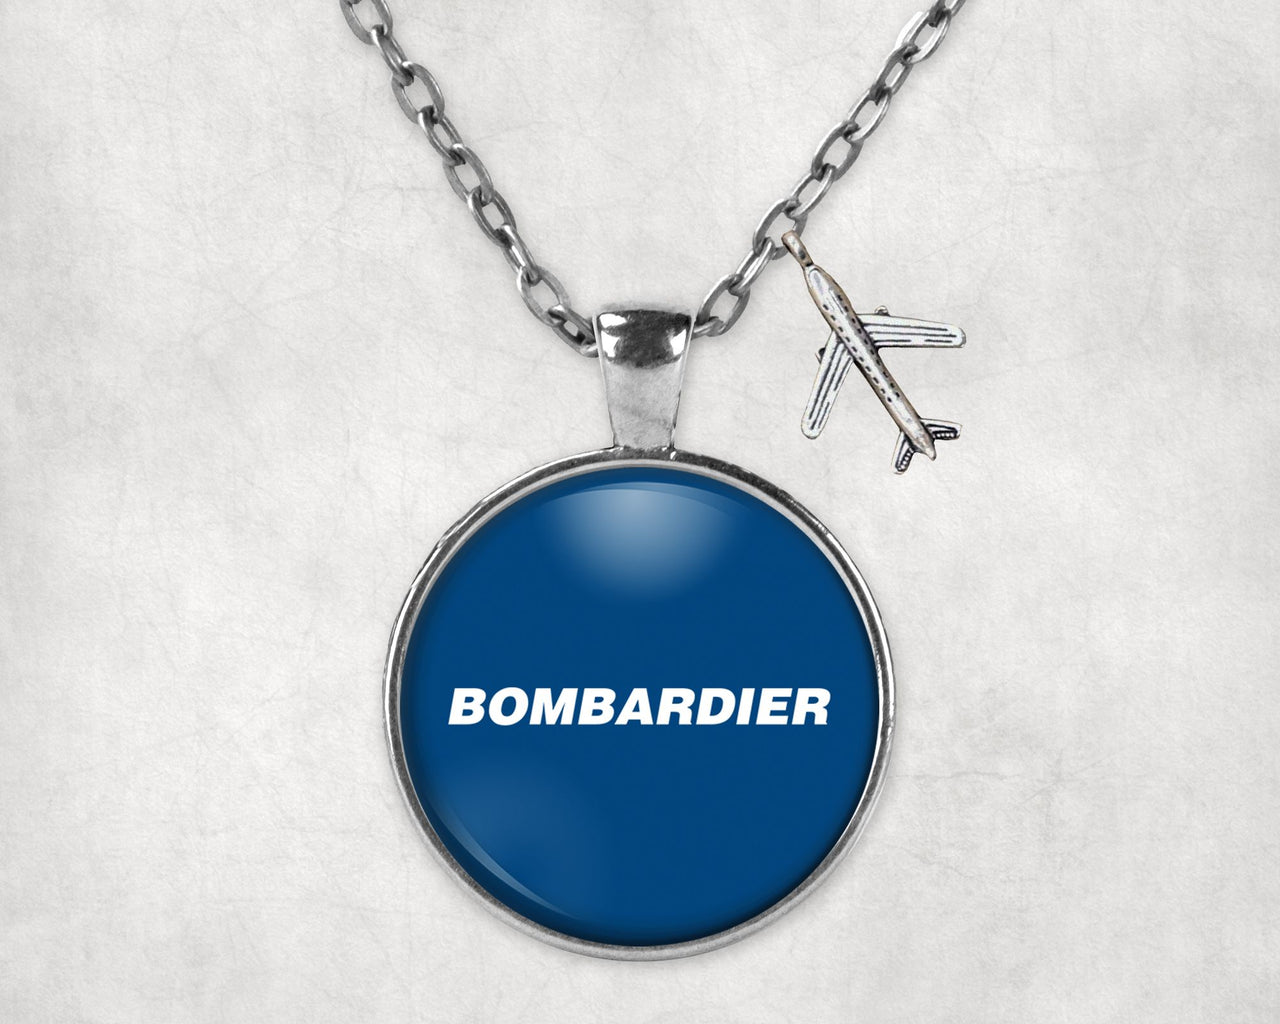 Bombardier & Text Designed Necklaces